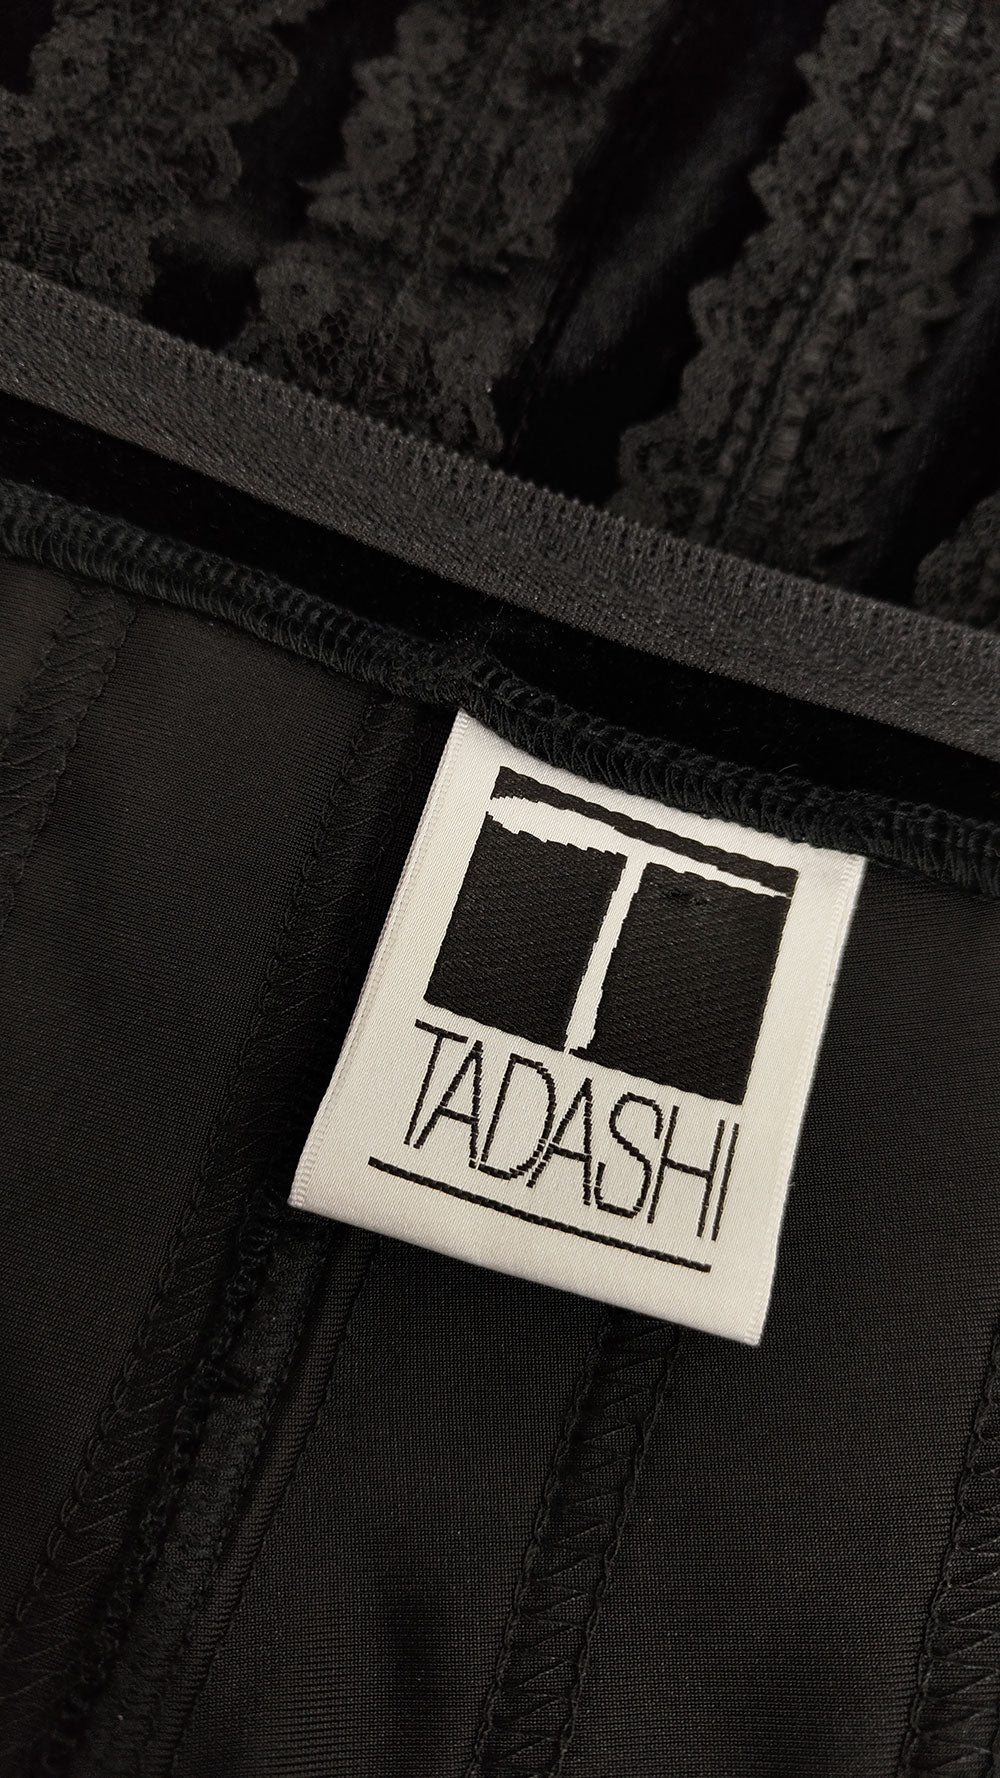 Tadashi Shoji Vintage Mesh Sleeve Black Evening Top, 1980s